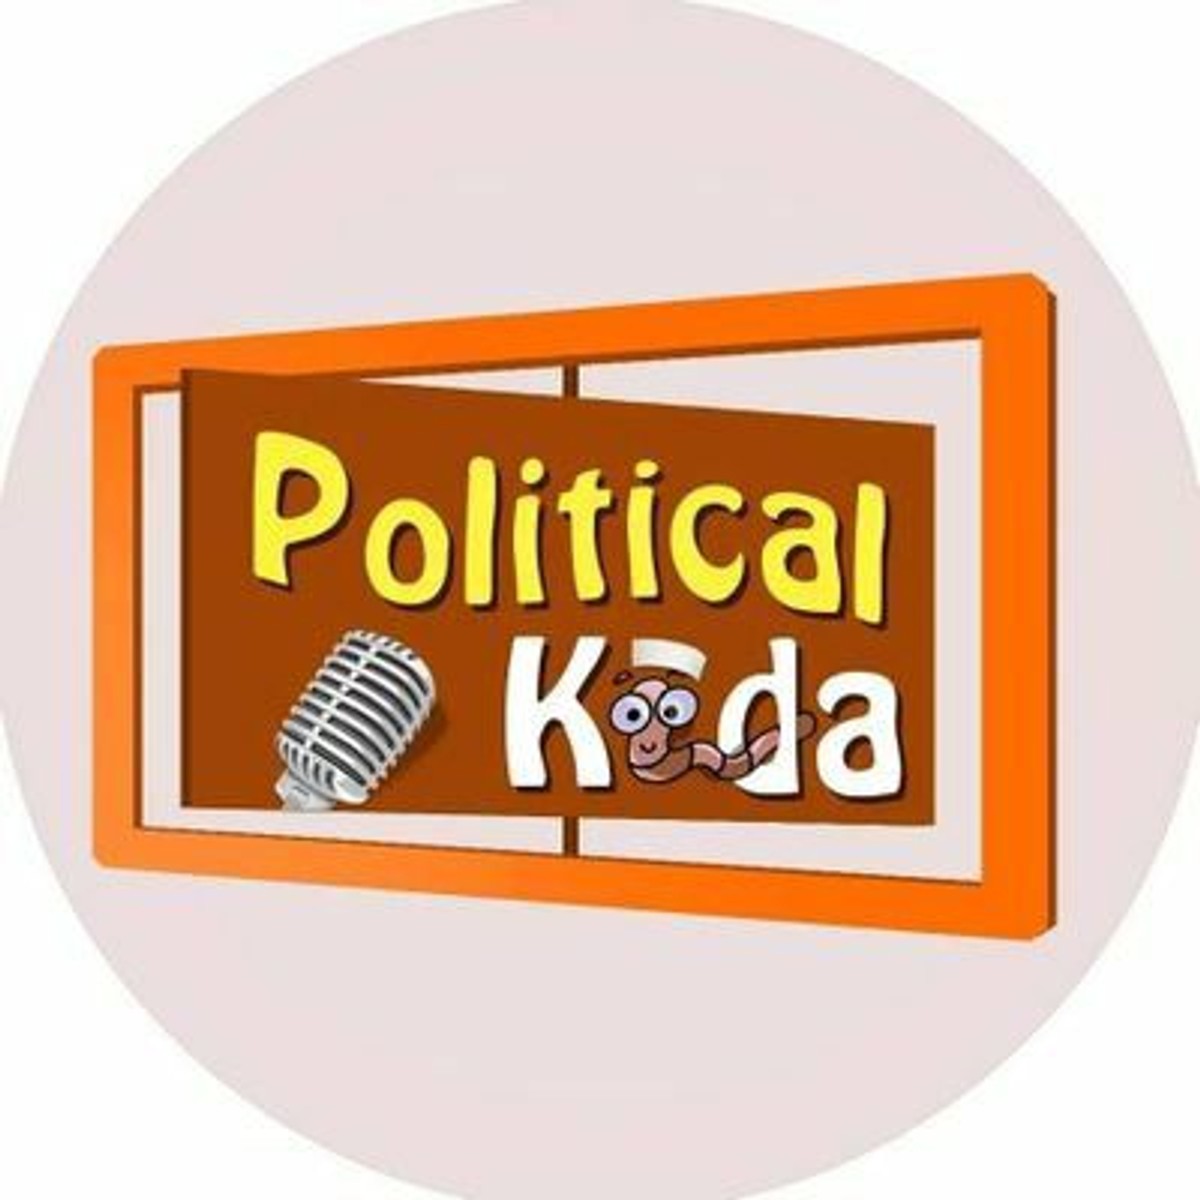 Political Kida photo